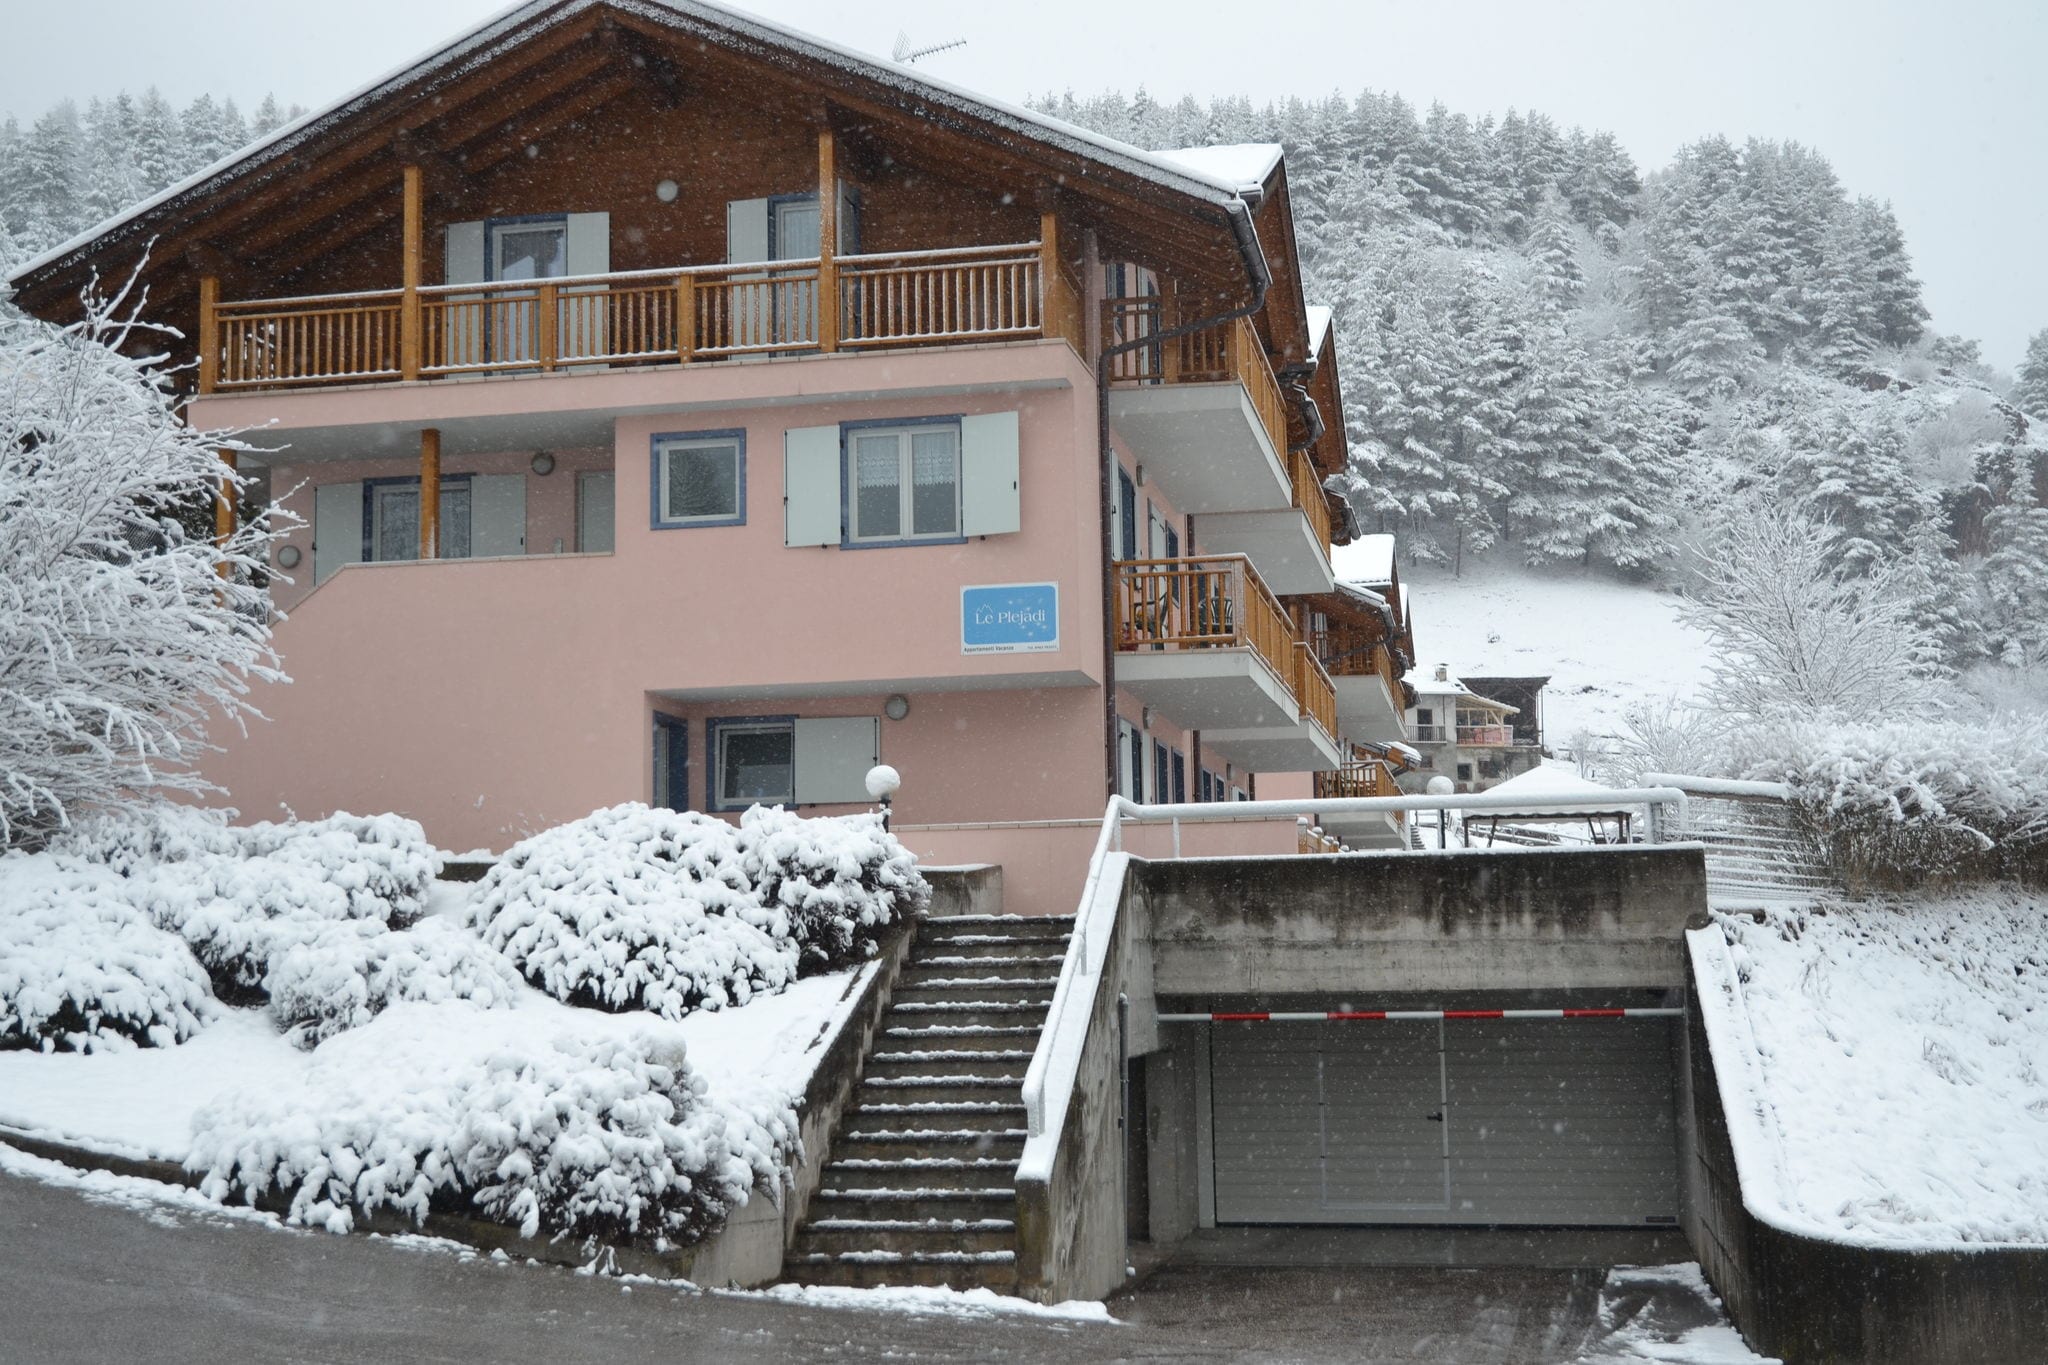 Mountain-View Apartment in Cavalese Italy near Ski Area